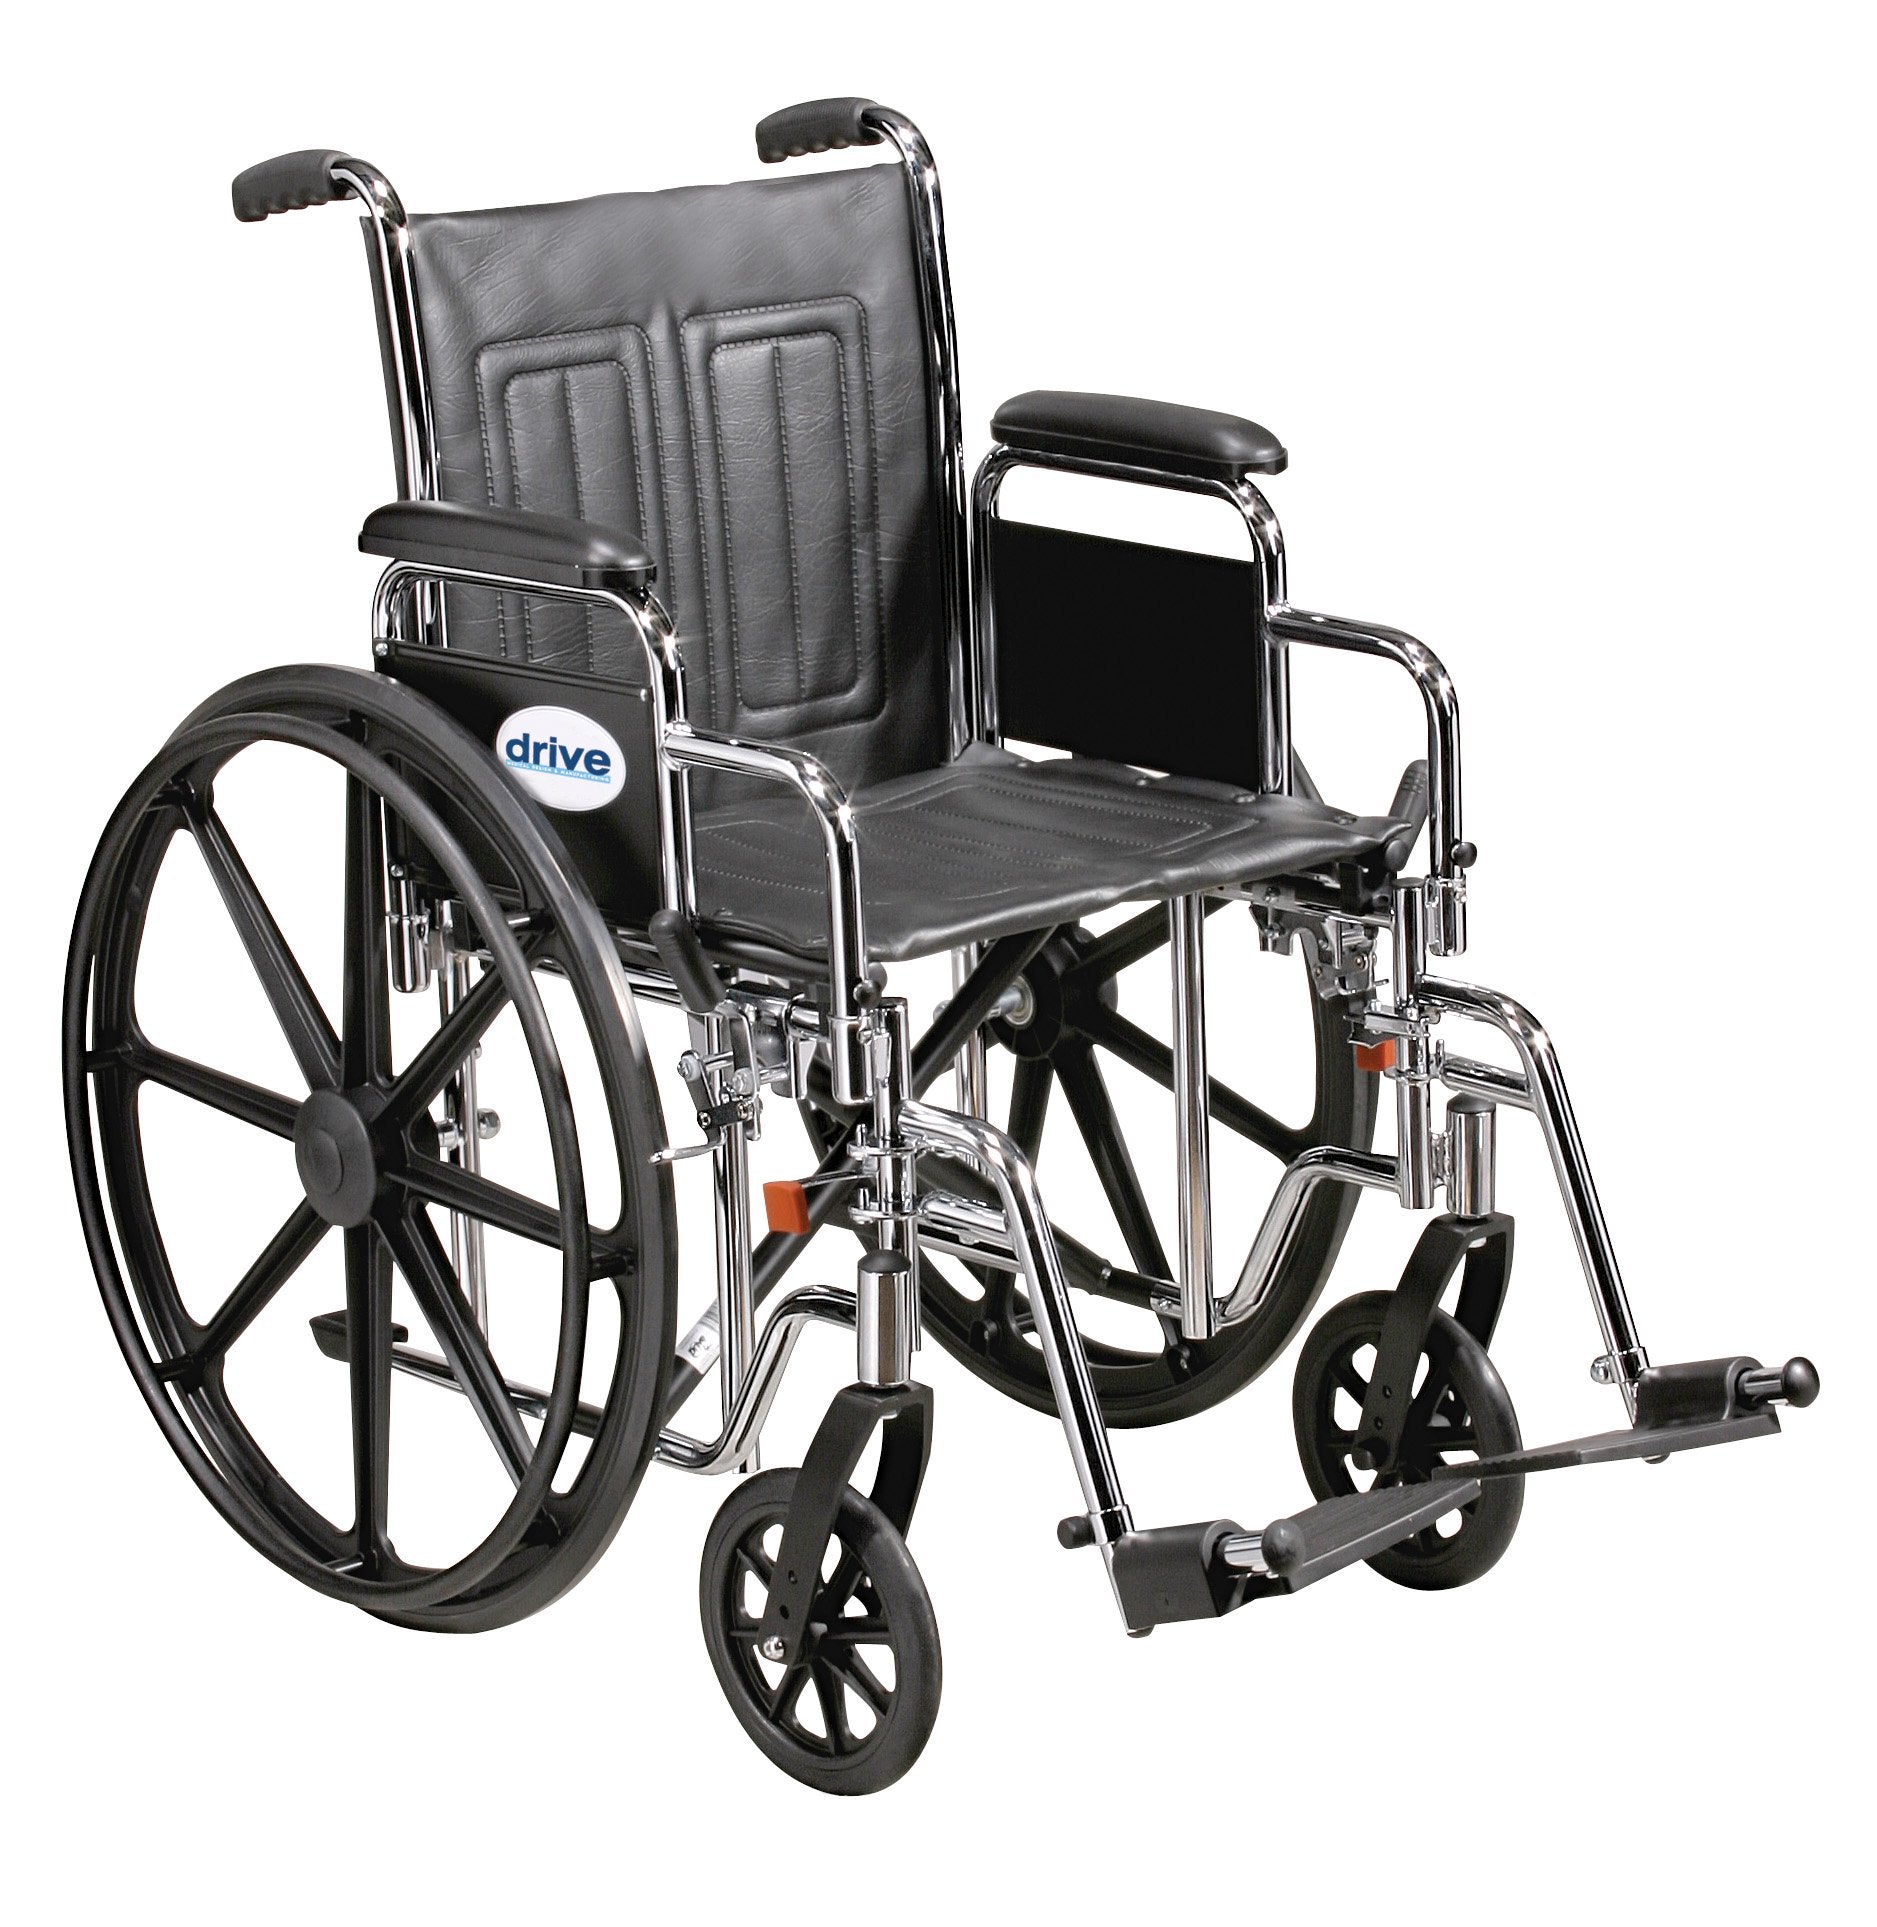 Bariatric Wheelchair driveª Sentra EC Heavy Duty Dual Axle Desk Length Arm Swing-Away Footrest Black Upholstery 20 Inch Seat Width Adult 450 lbs. Weight Capacity